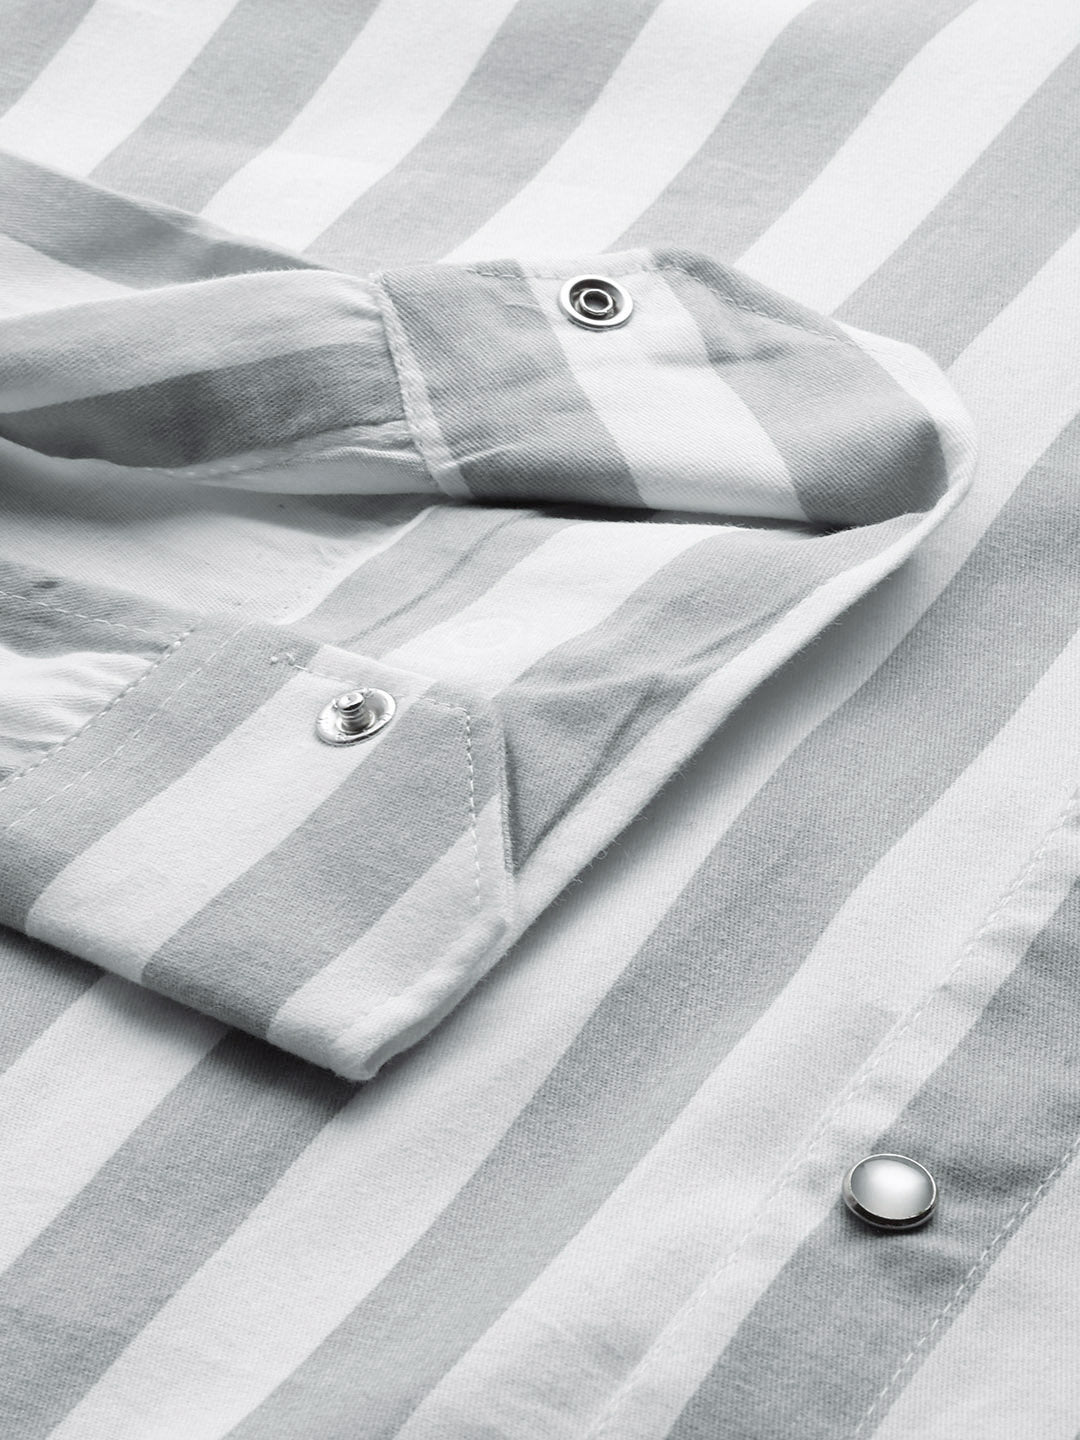 Luxrio Men's Stripped Mandarin Collared Full Sleeves Casual Shirt Grey